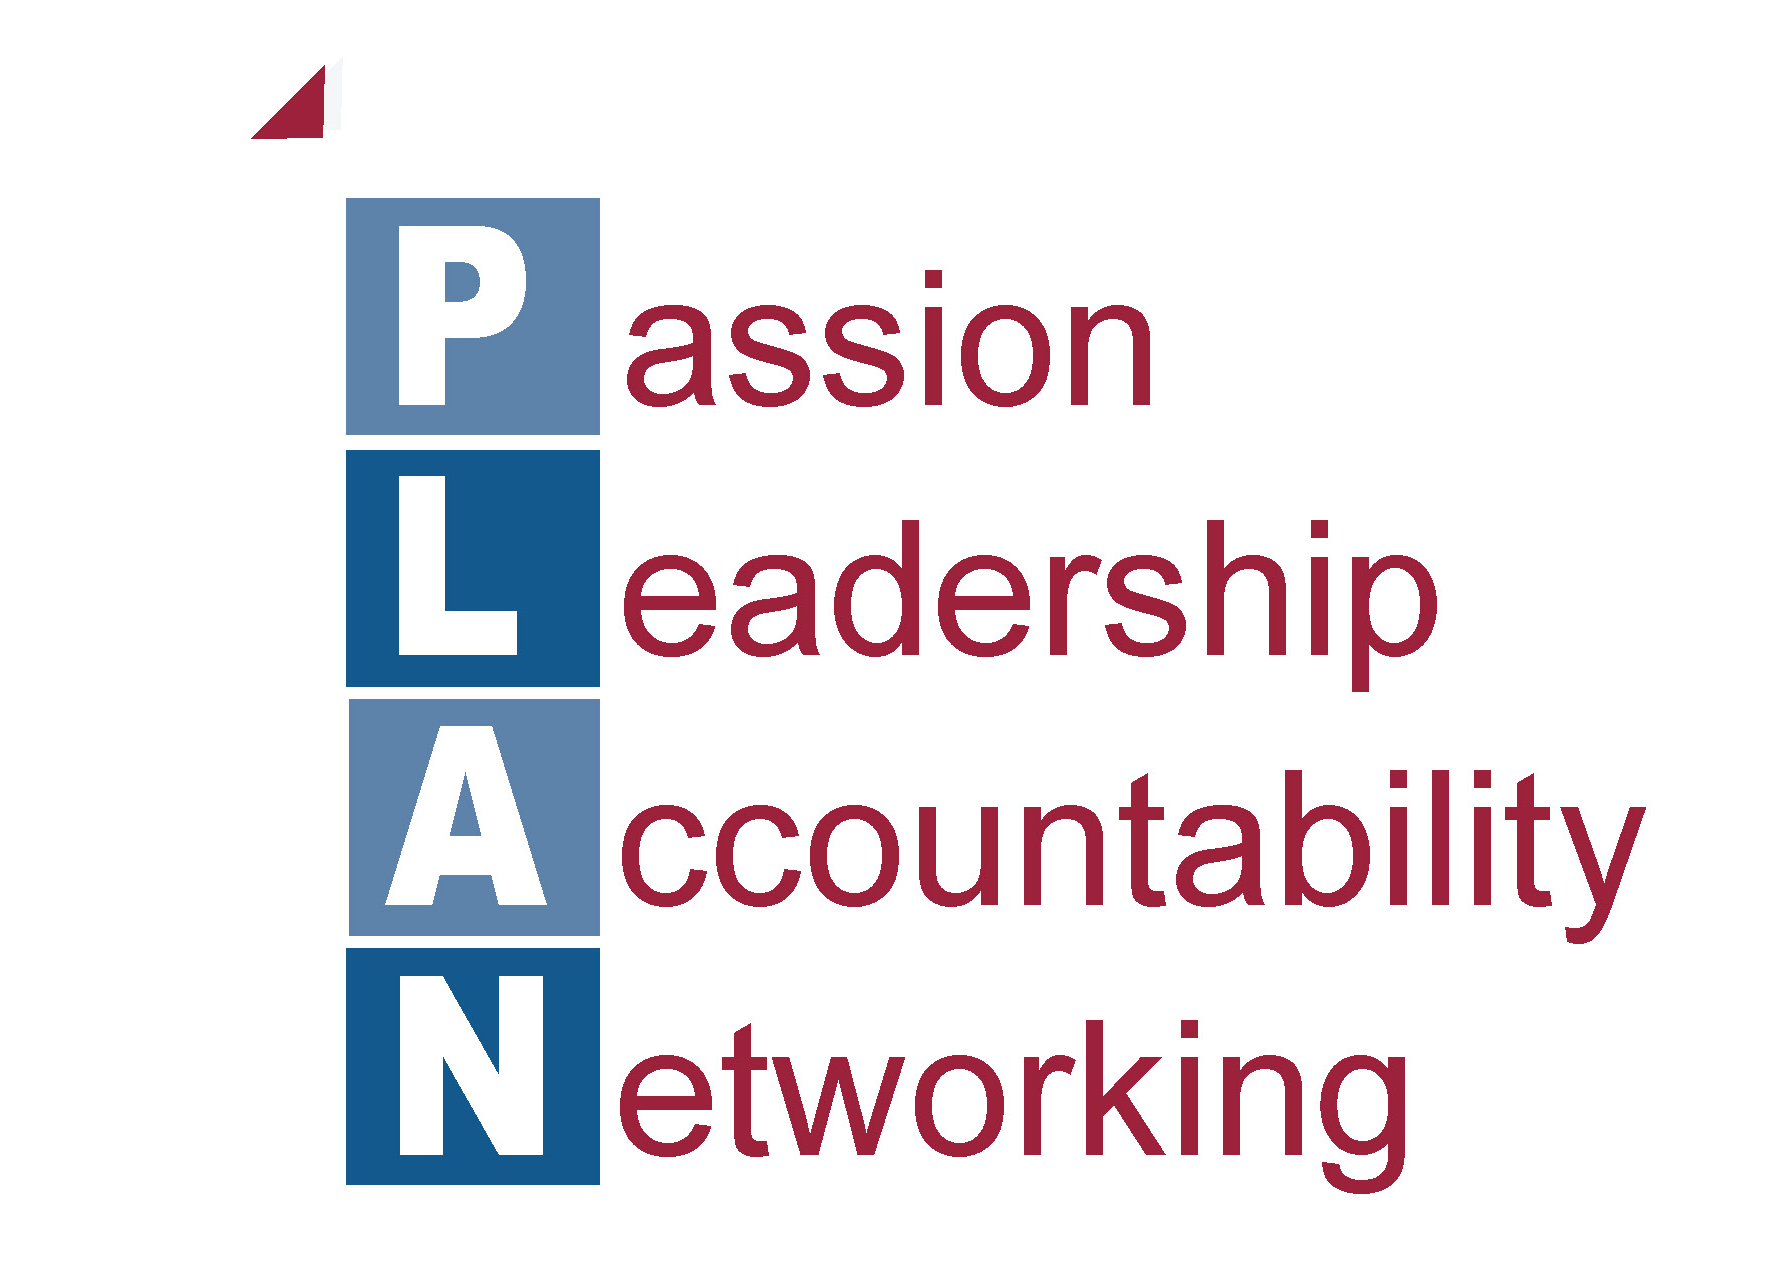 PLAN 2020: Passion for Public Service